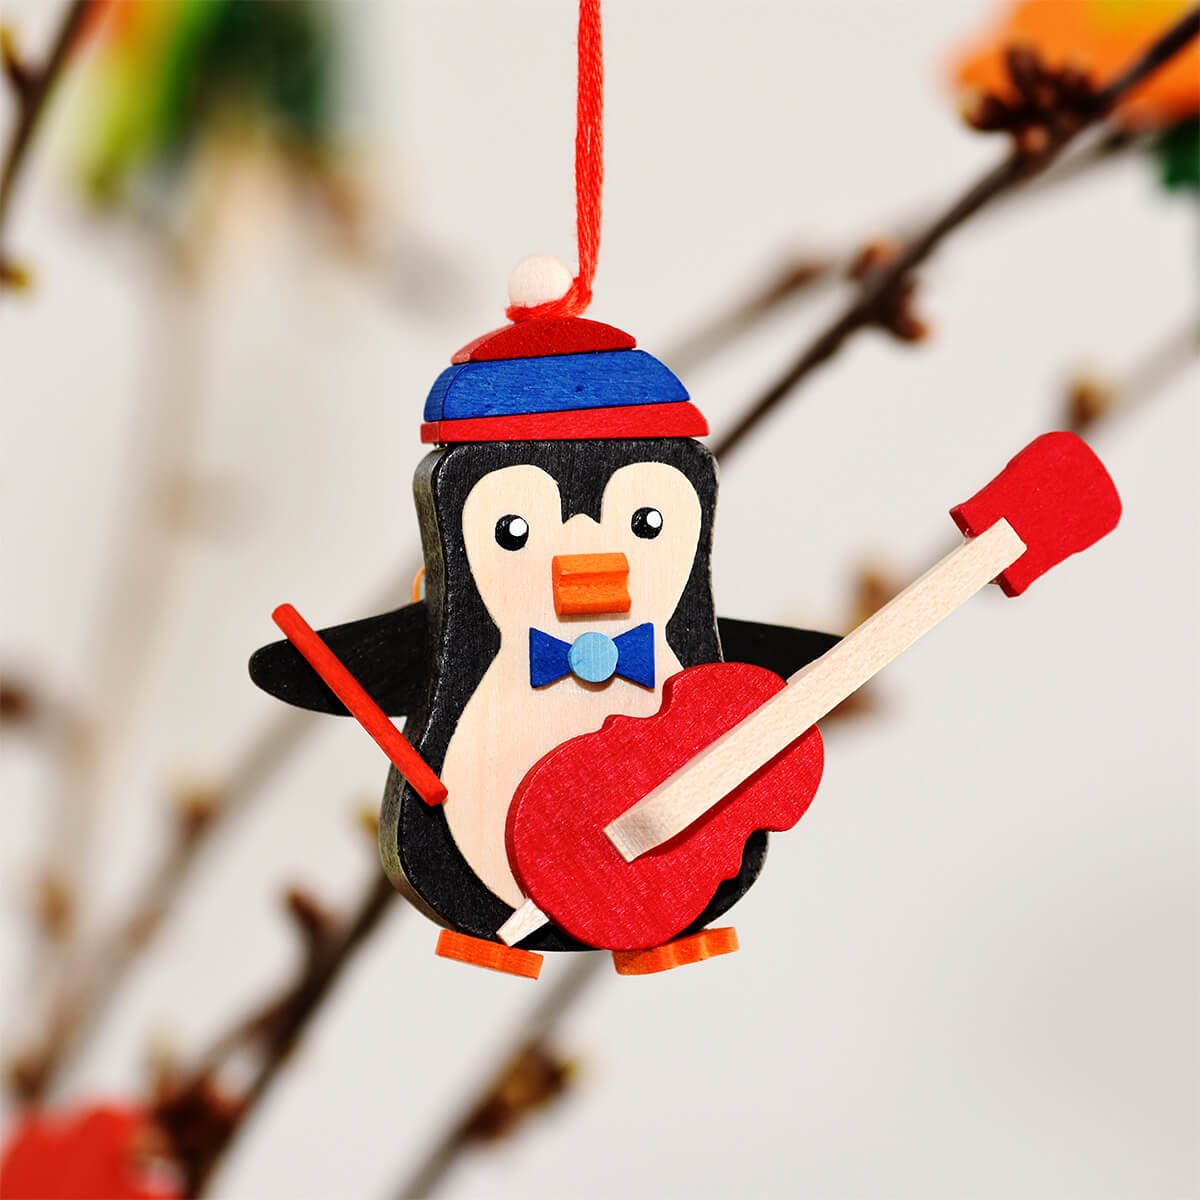 Penguin Ornament with bird